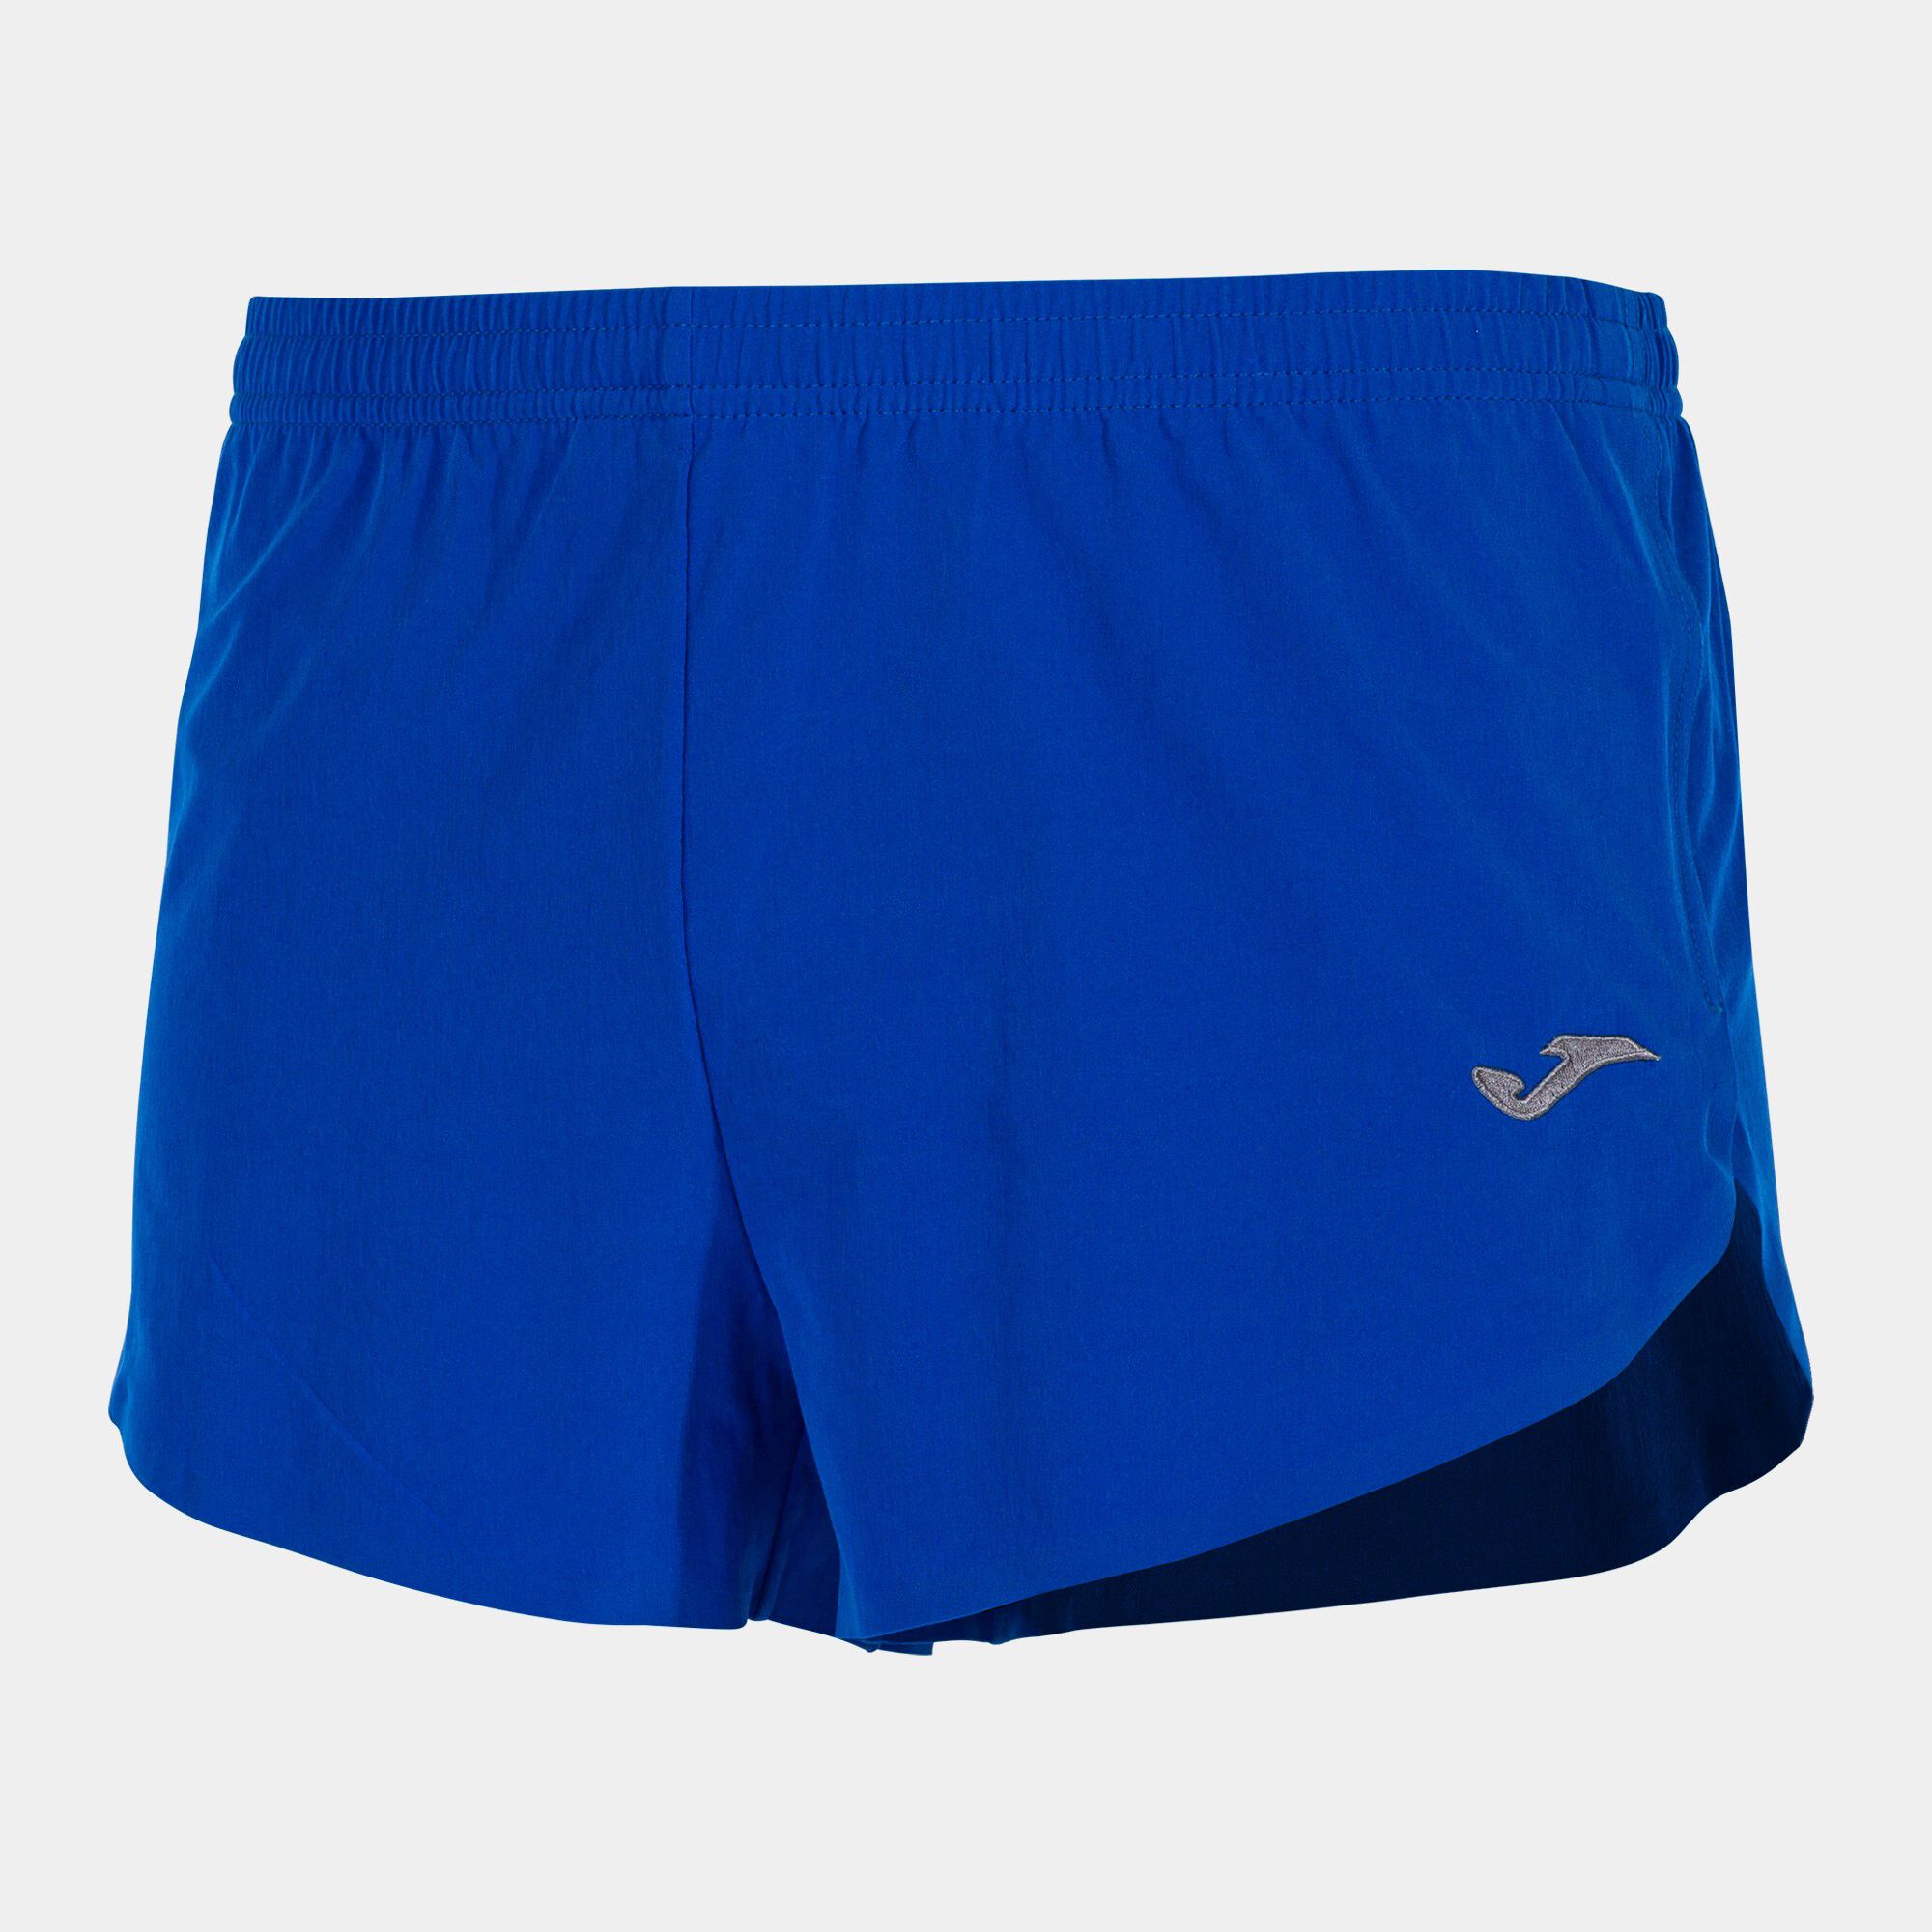 Shorts man Olimpia royal blue